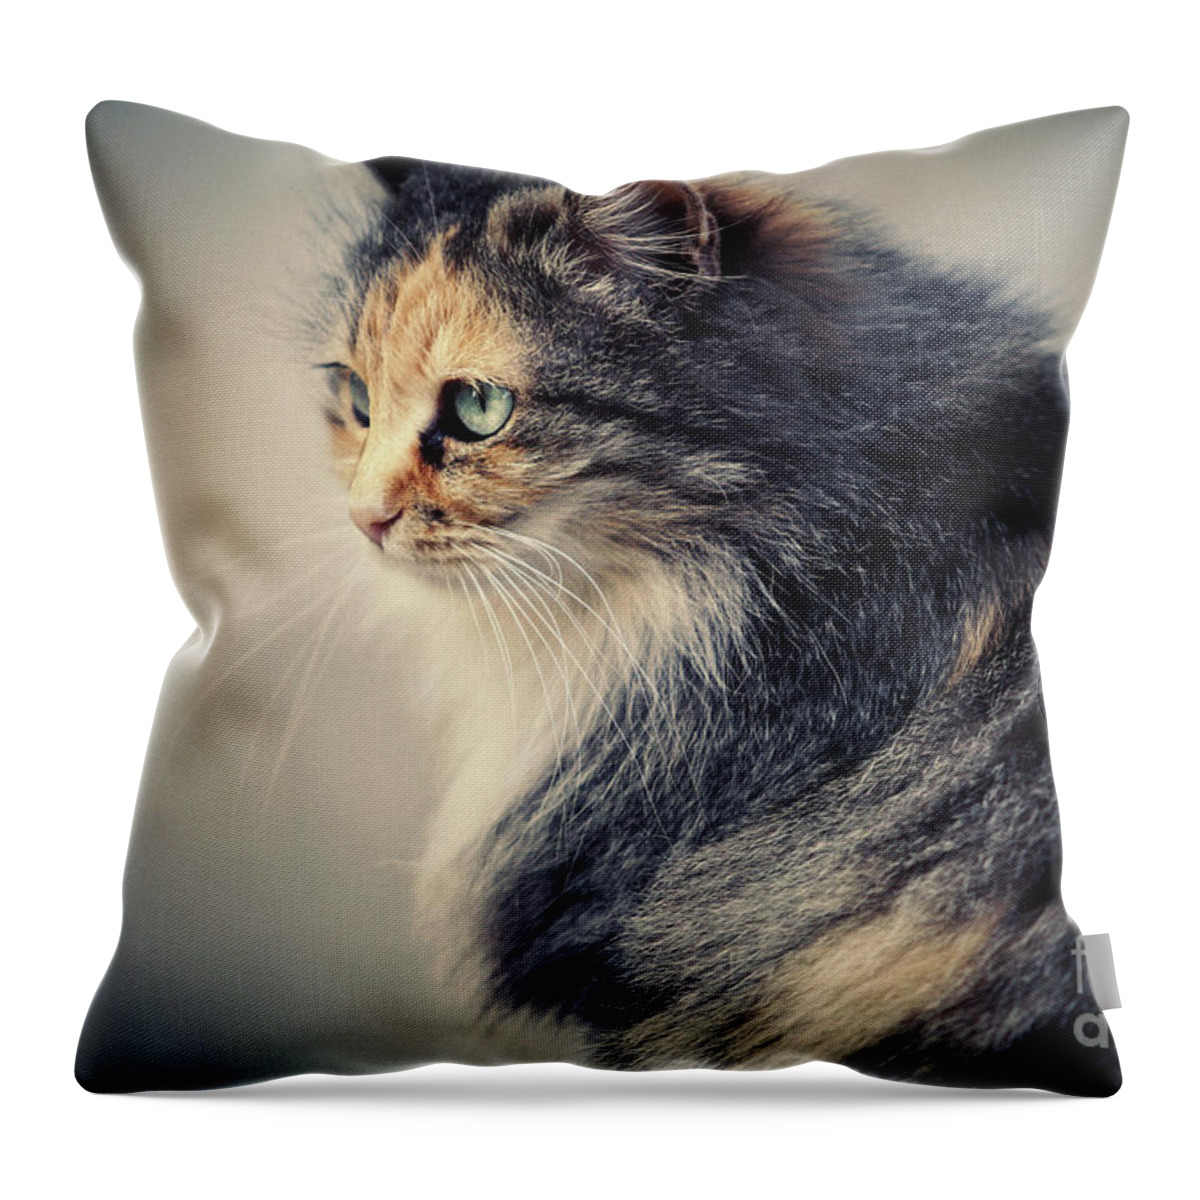 Cat Throw Pillow featuring the photograph The Sad Street Cat by Dimitar Hristov